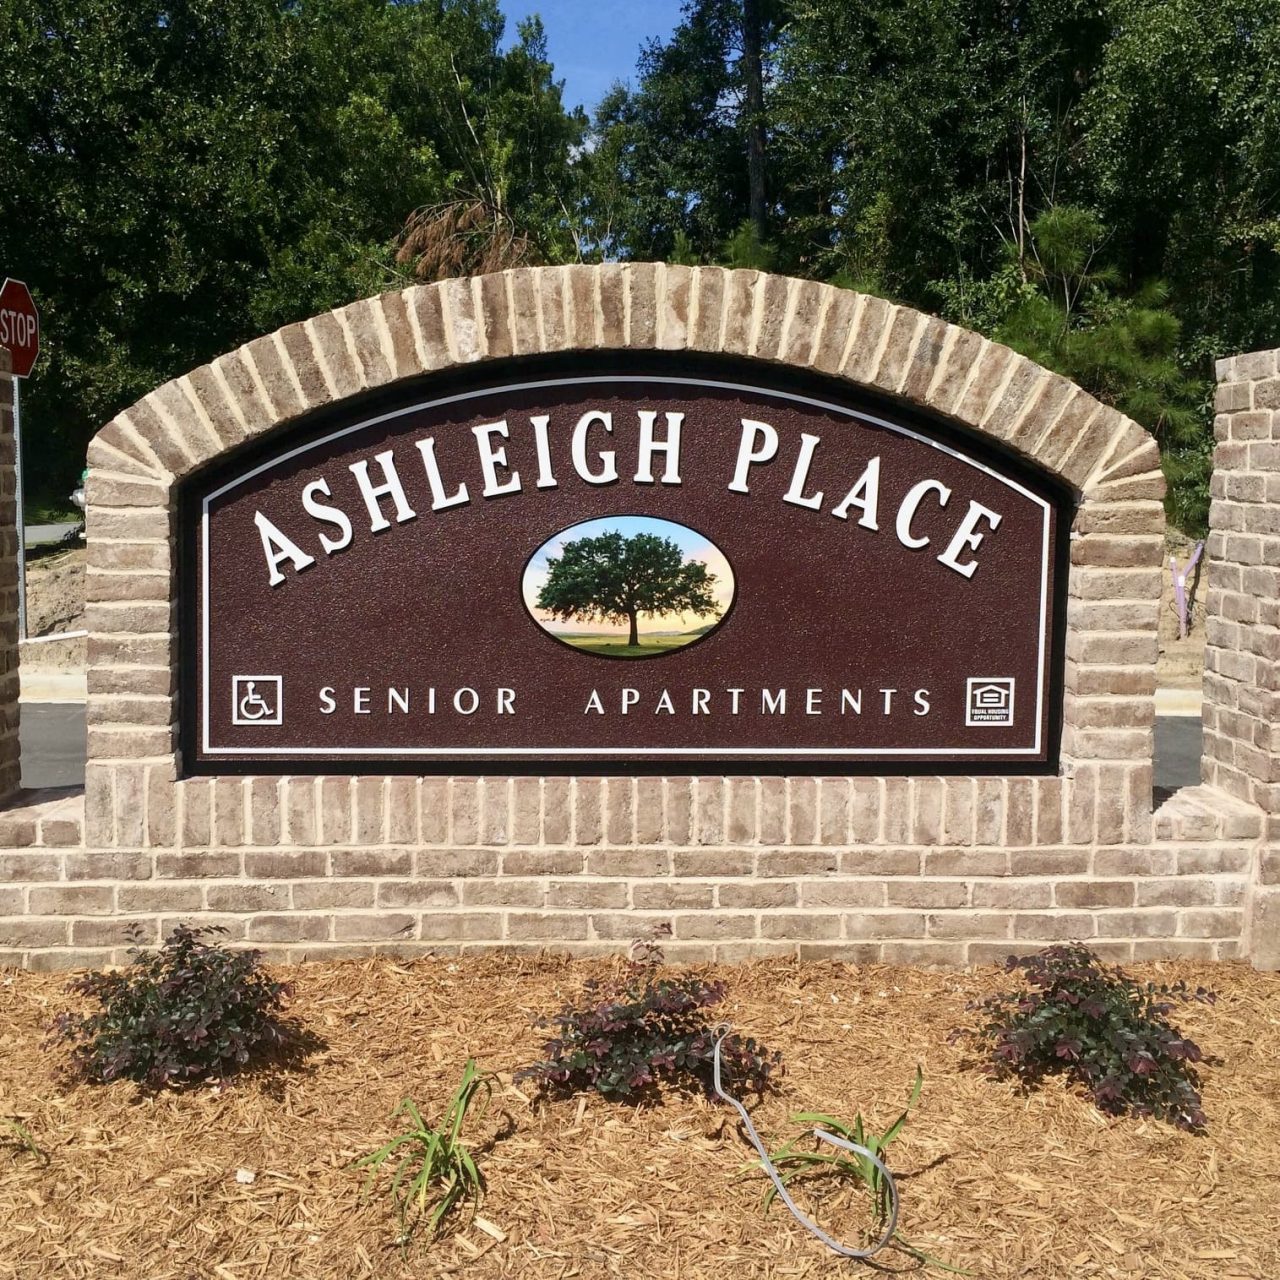 Ashleigh Place